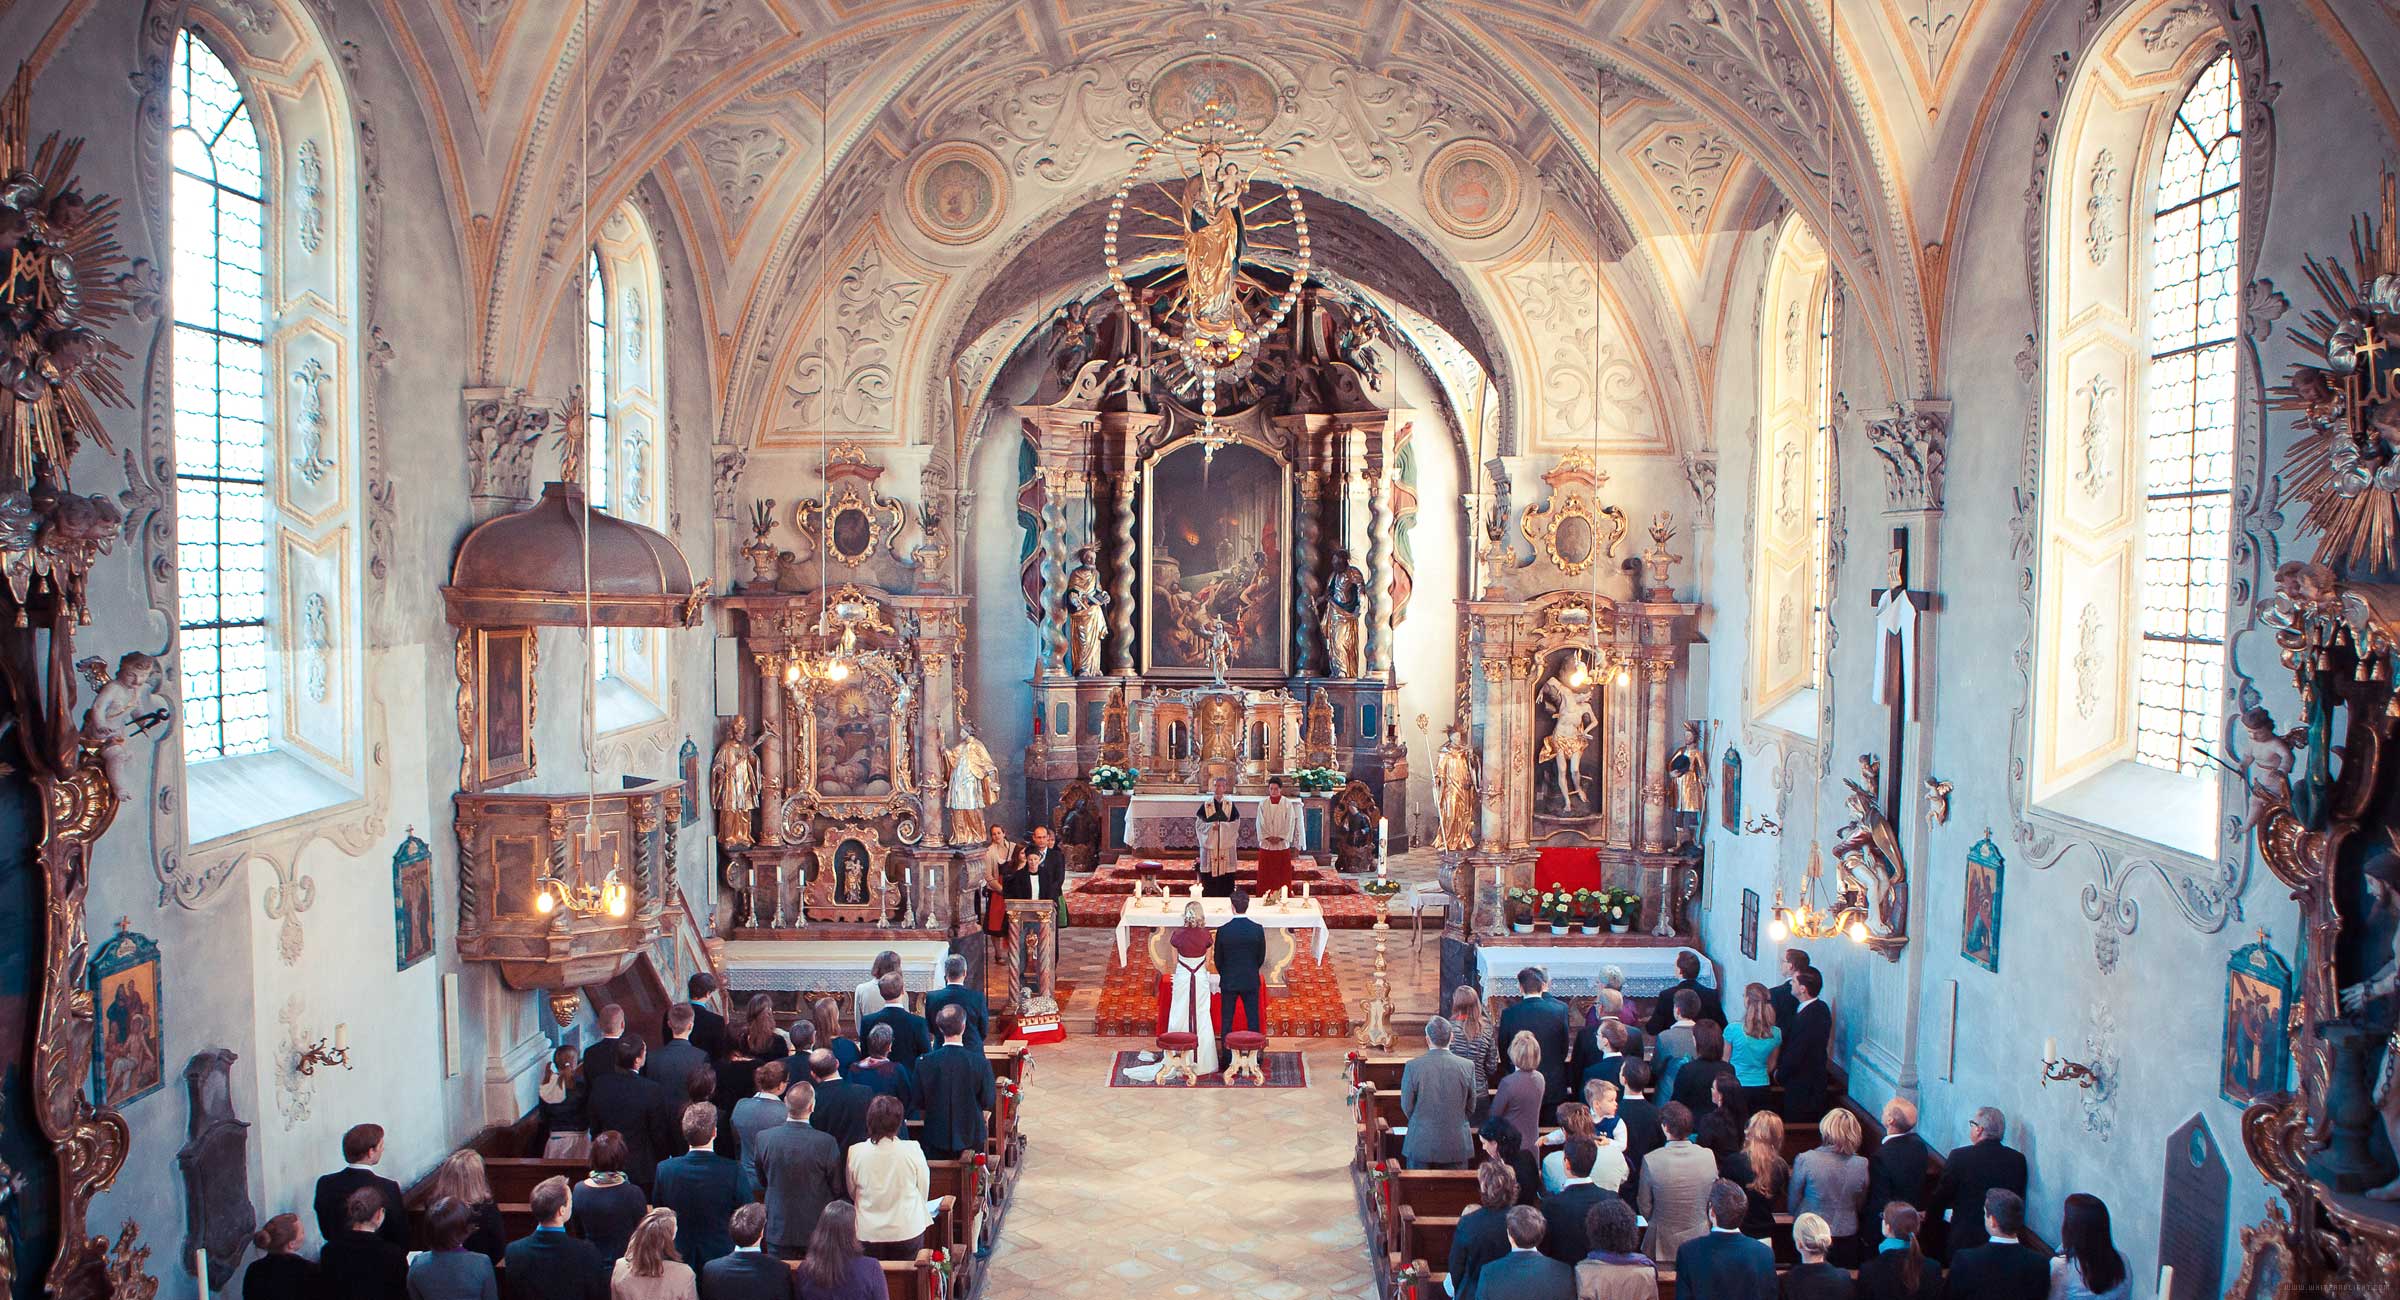 Wedding photographer Munich cost